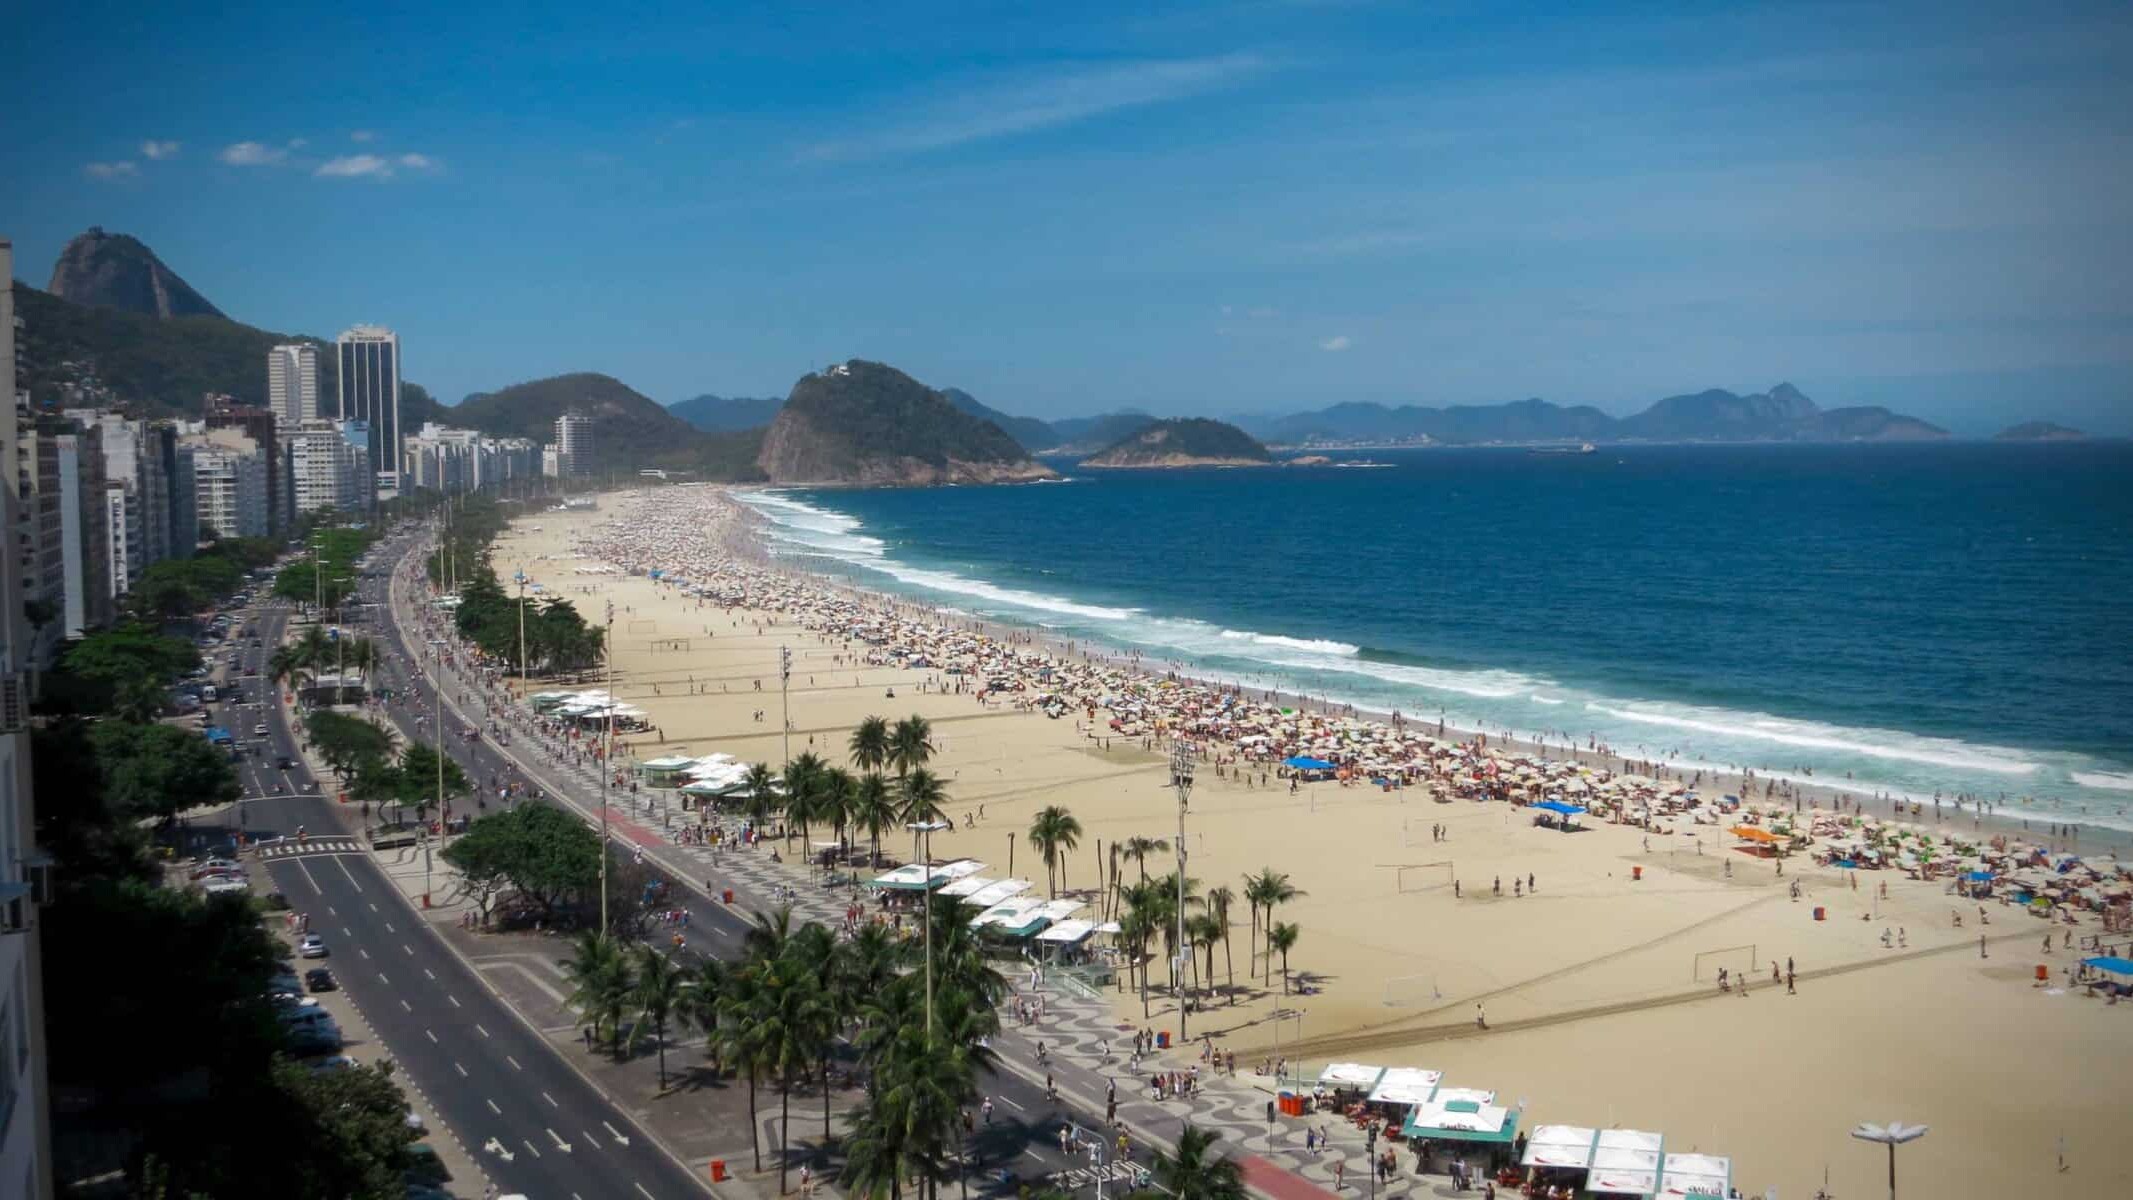 La plage emblématique de Rio